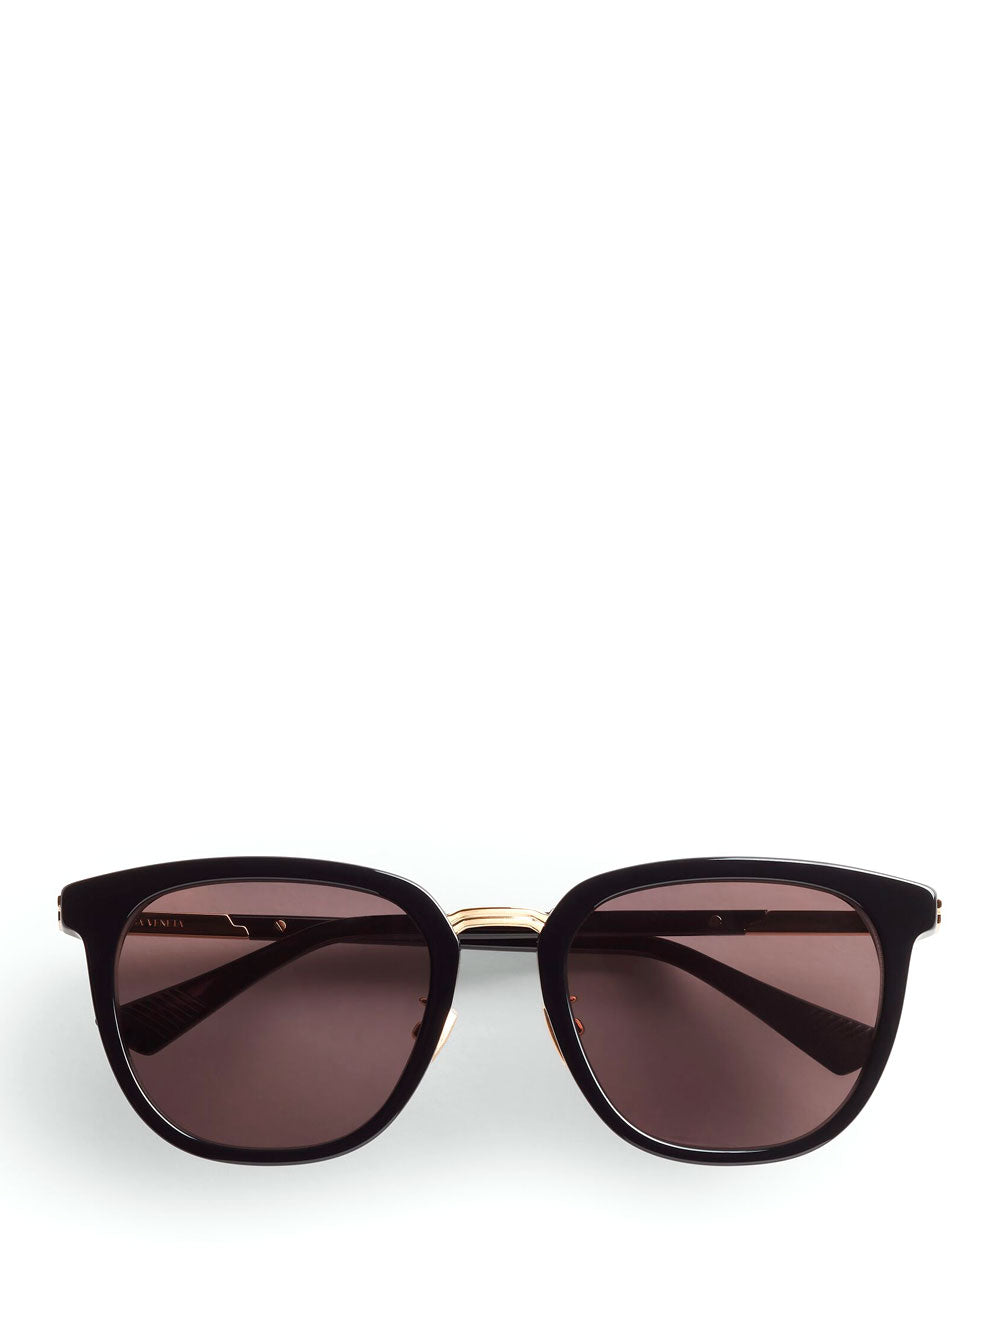 Forte square sunglasses